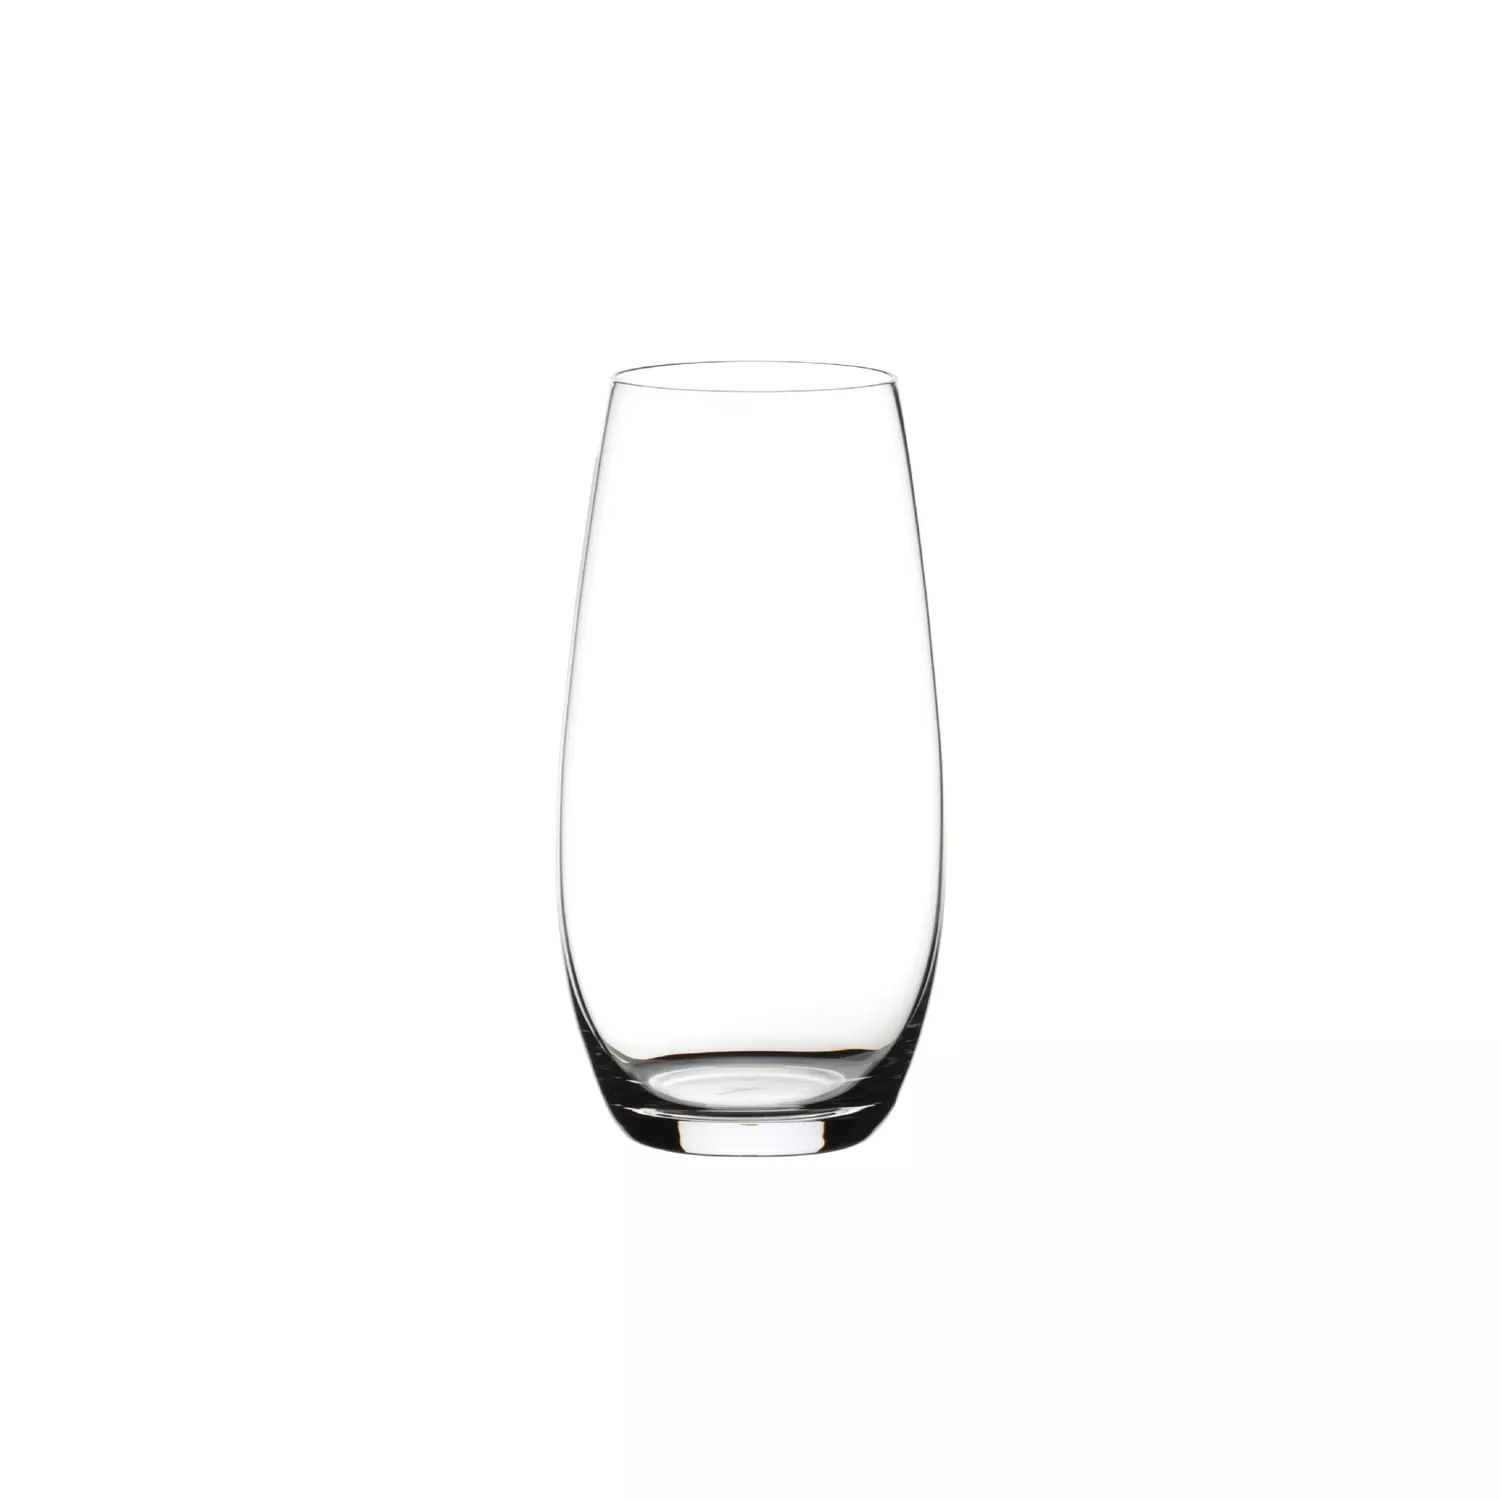 RIEDEL O Wine Tumbler Champagne Glass, Set of 2